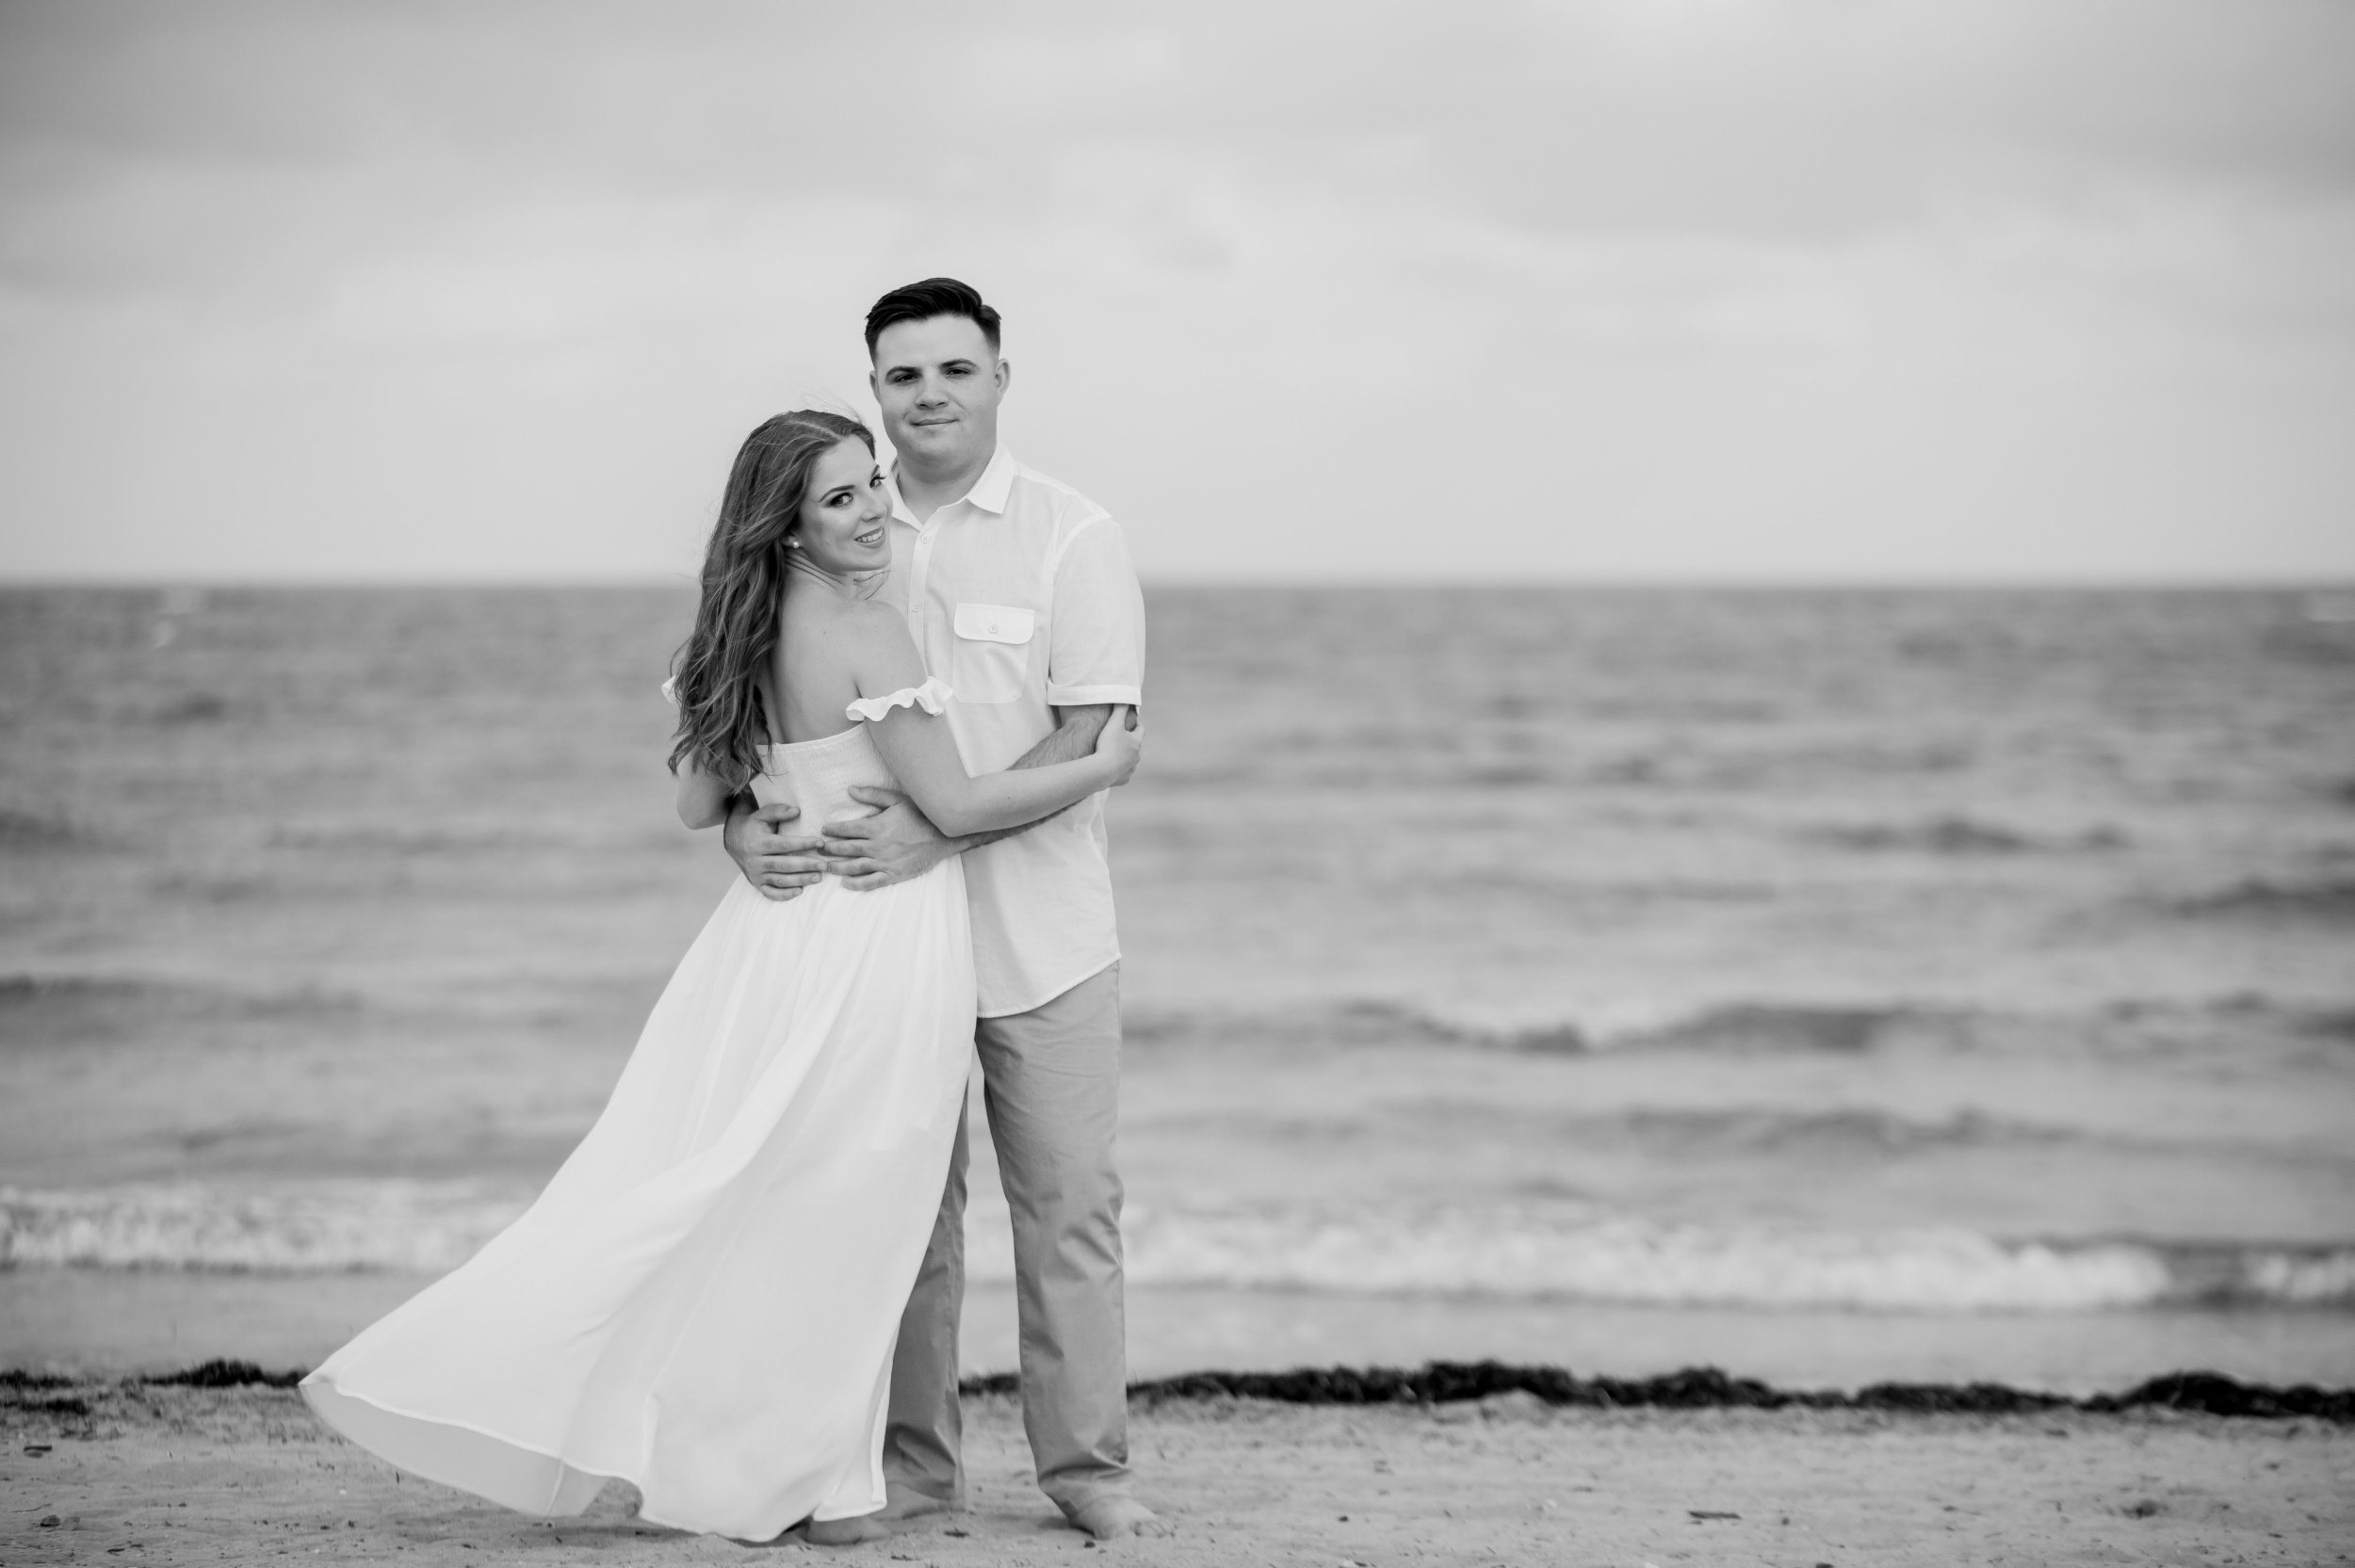 Engagement Session at Crandon Park - Miami Wedding Photographers - Santy Martinez 10.jpg